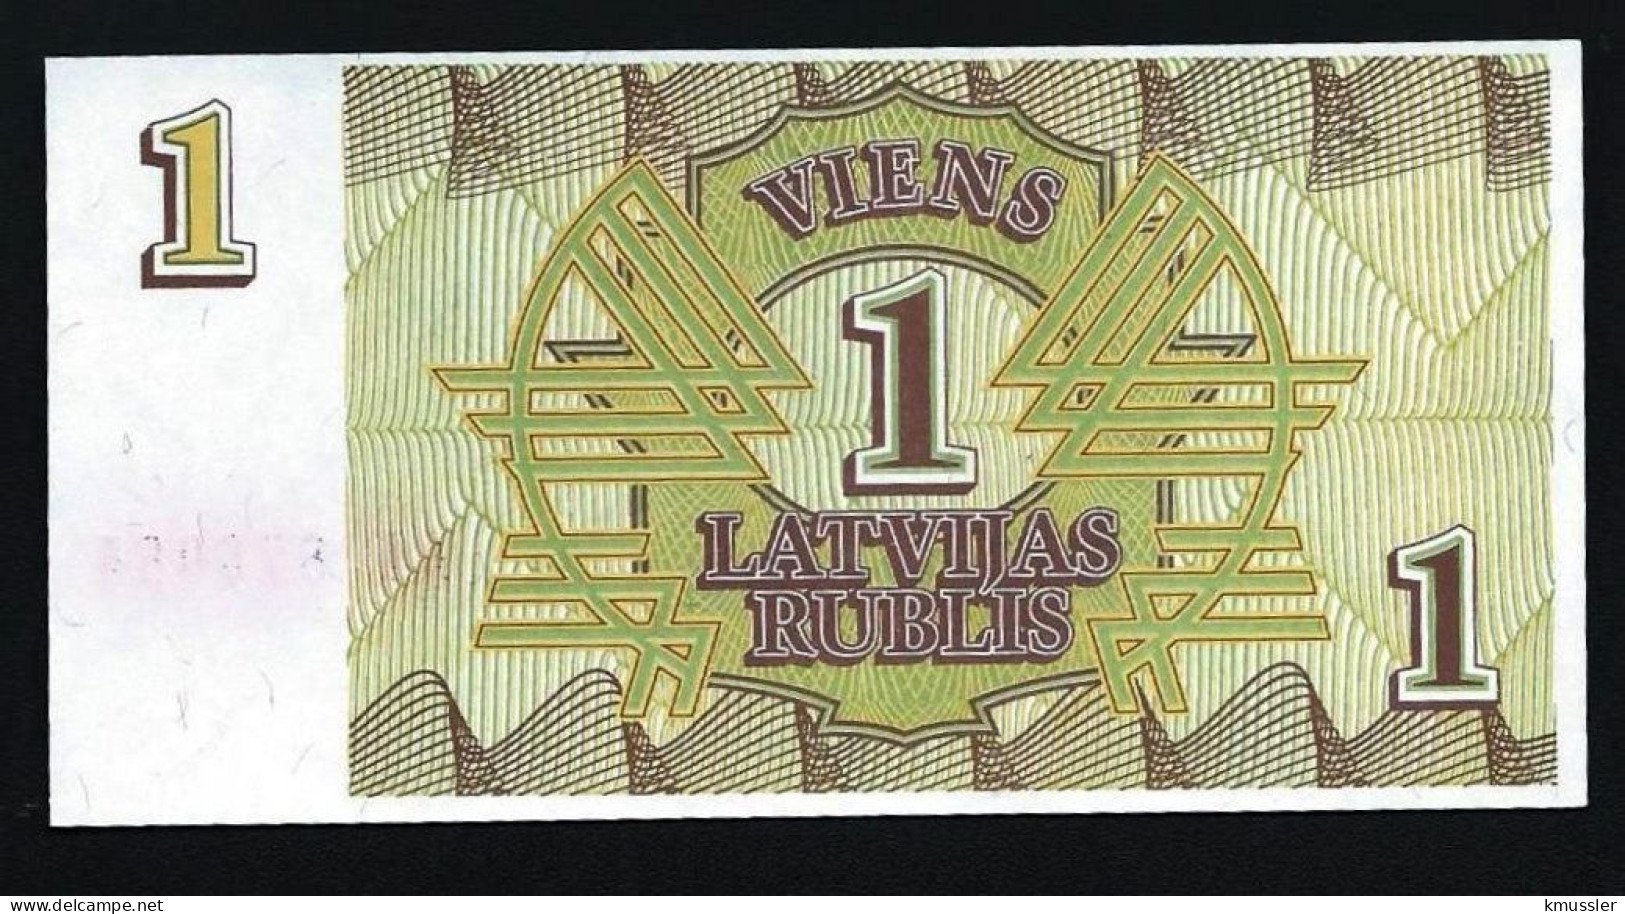 # # # Banknote Lettland (Latvijas) 1 Rubel (Rublis) 1992 UNC # # # - Letonia